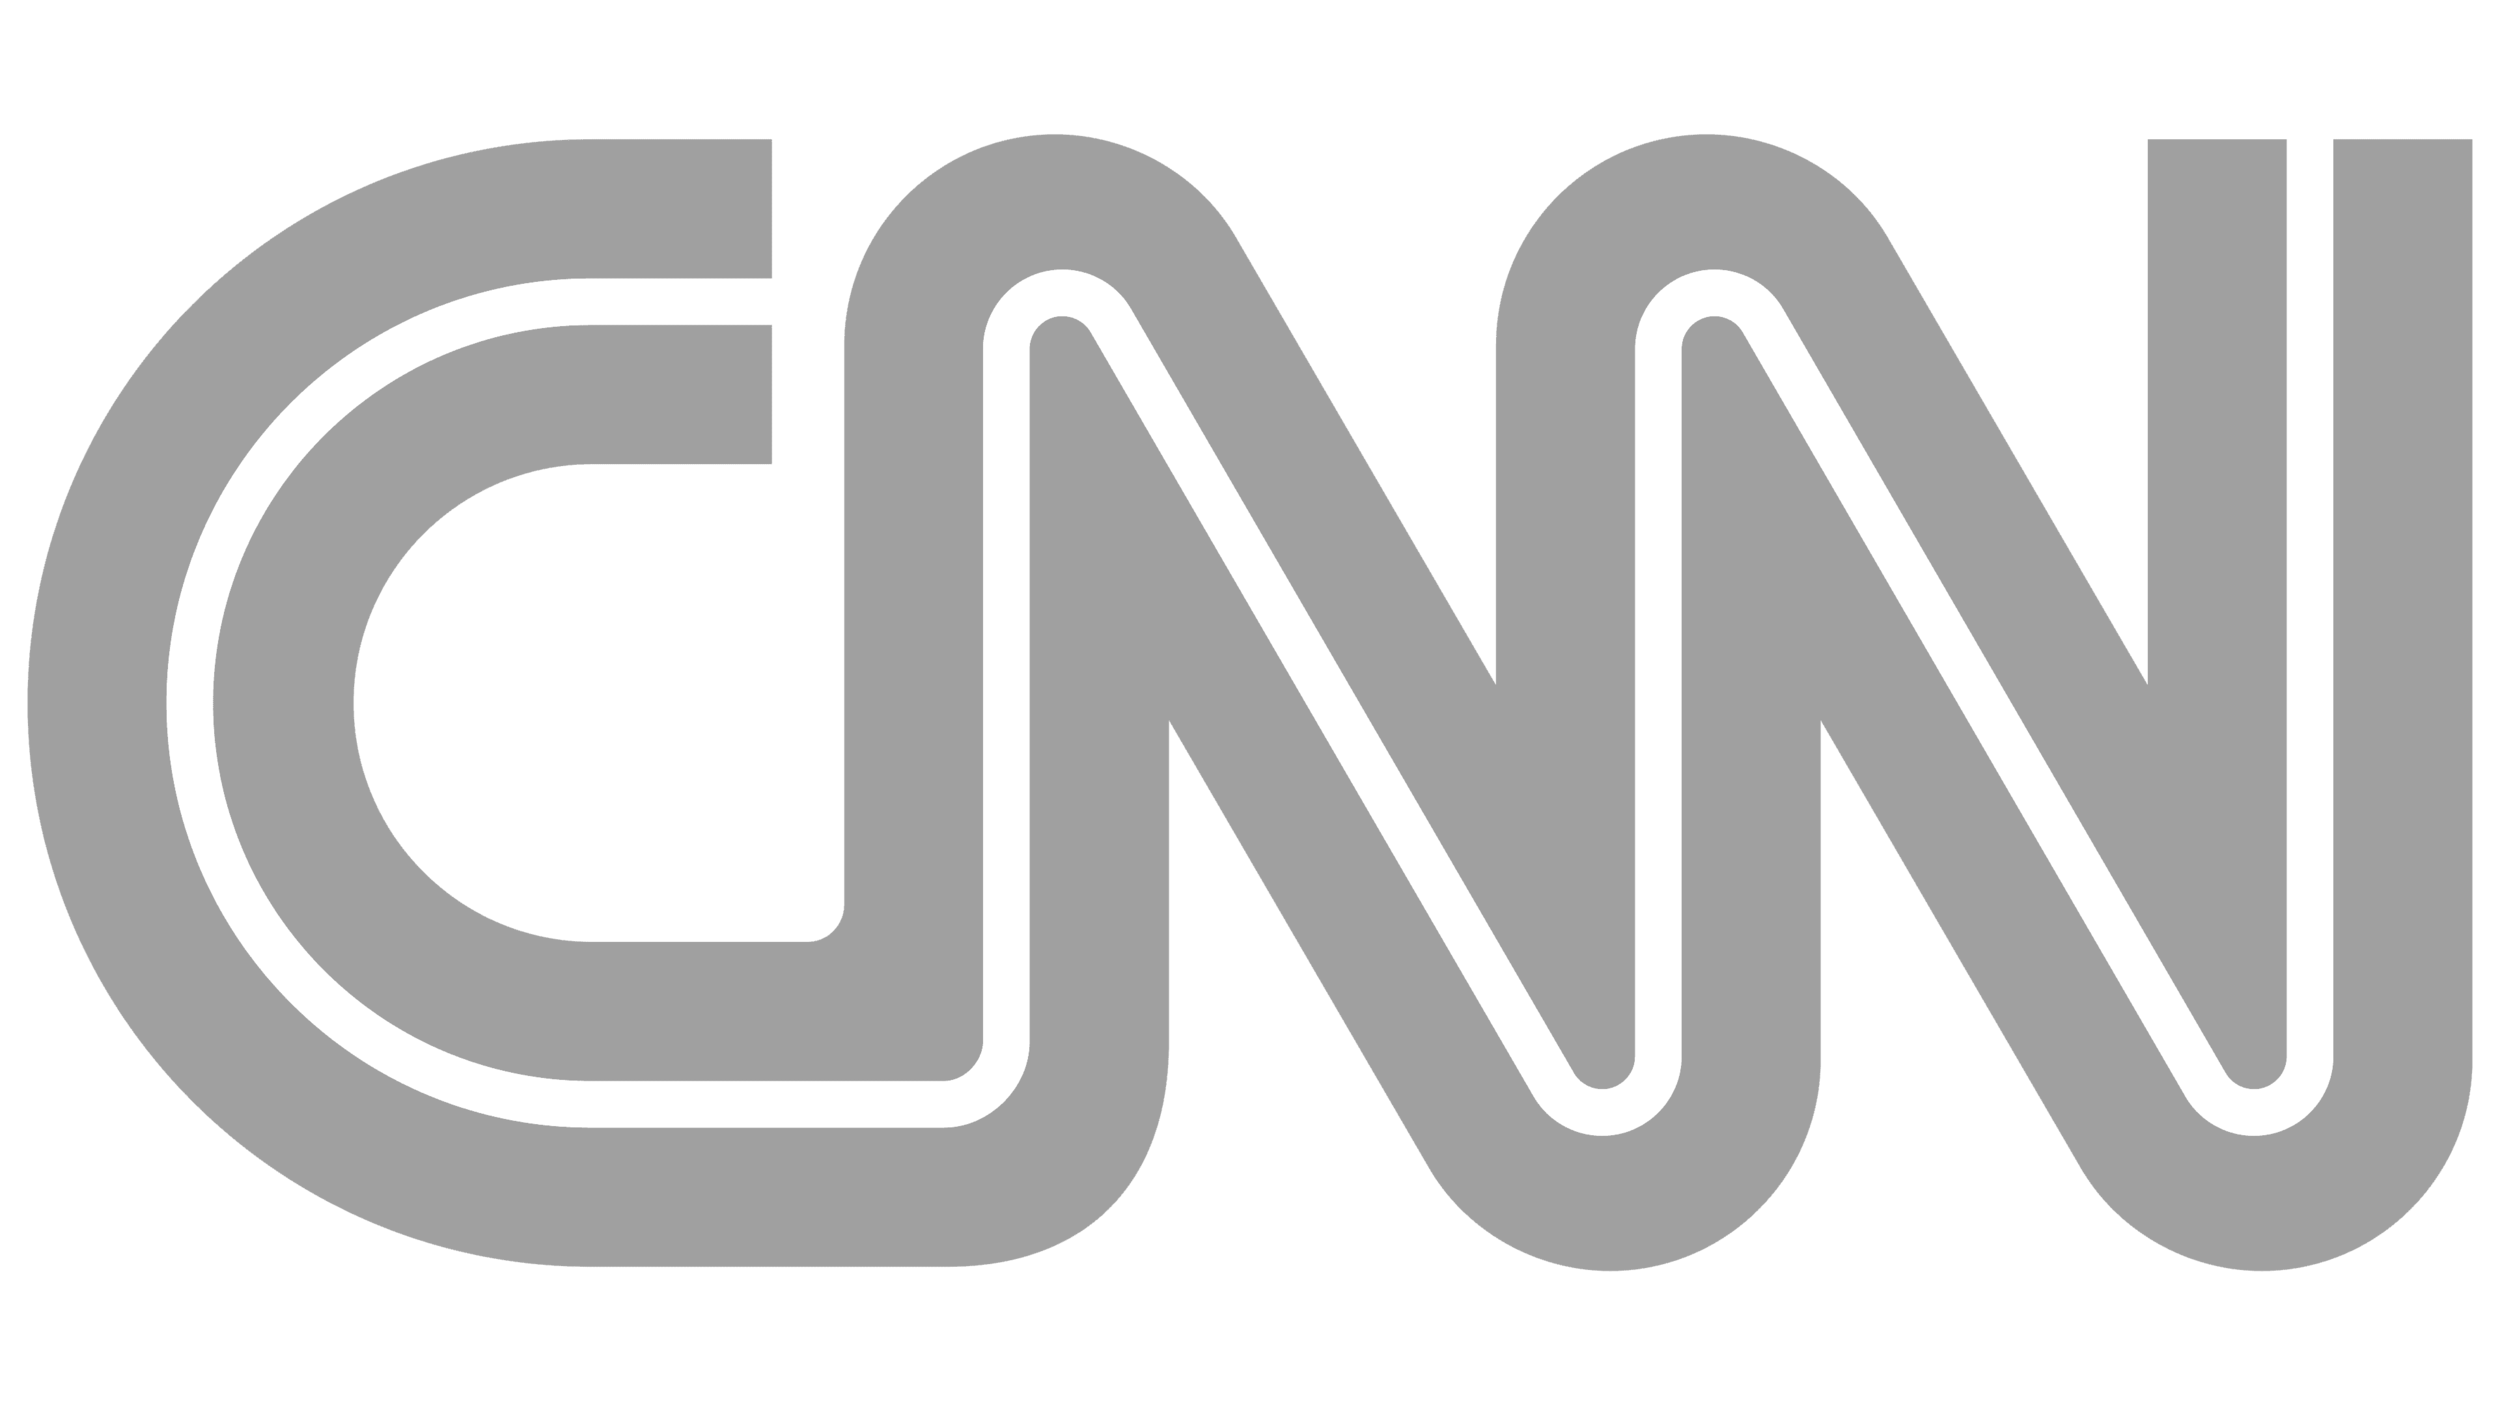 CNN-logobw.png